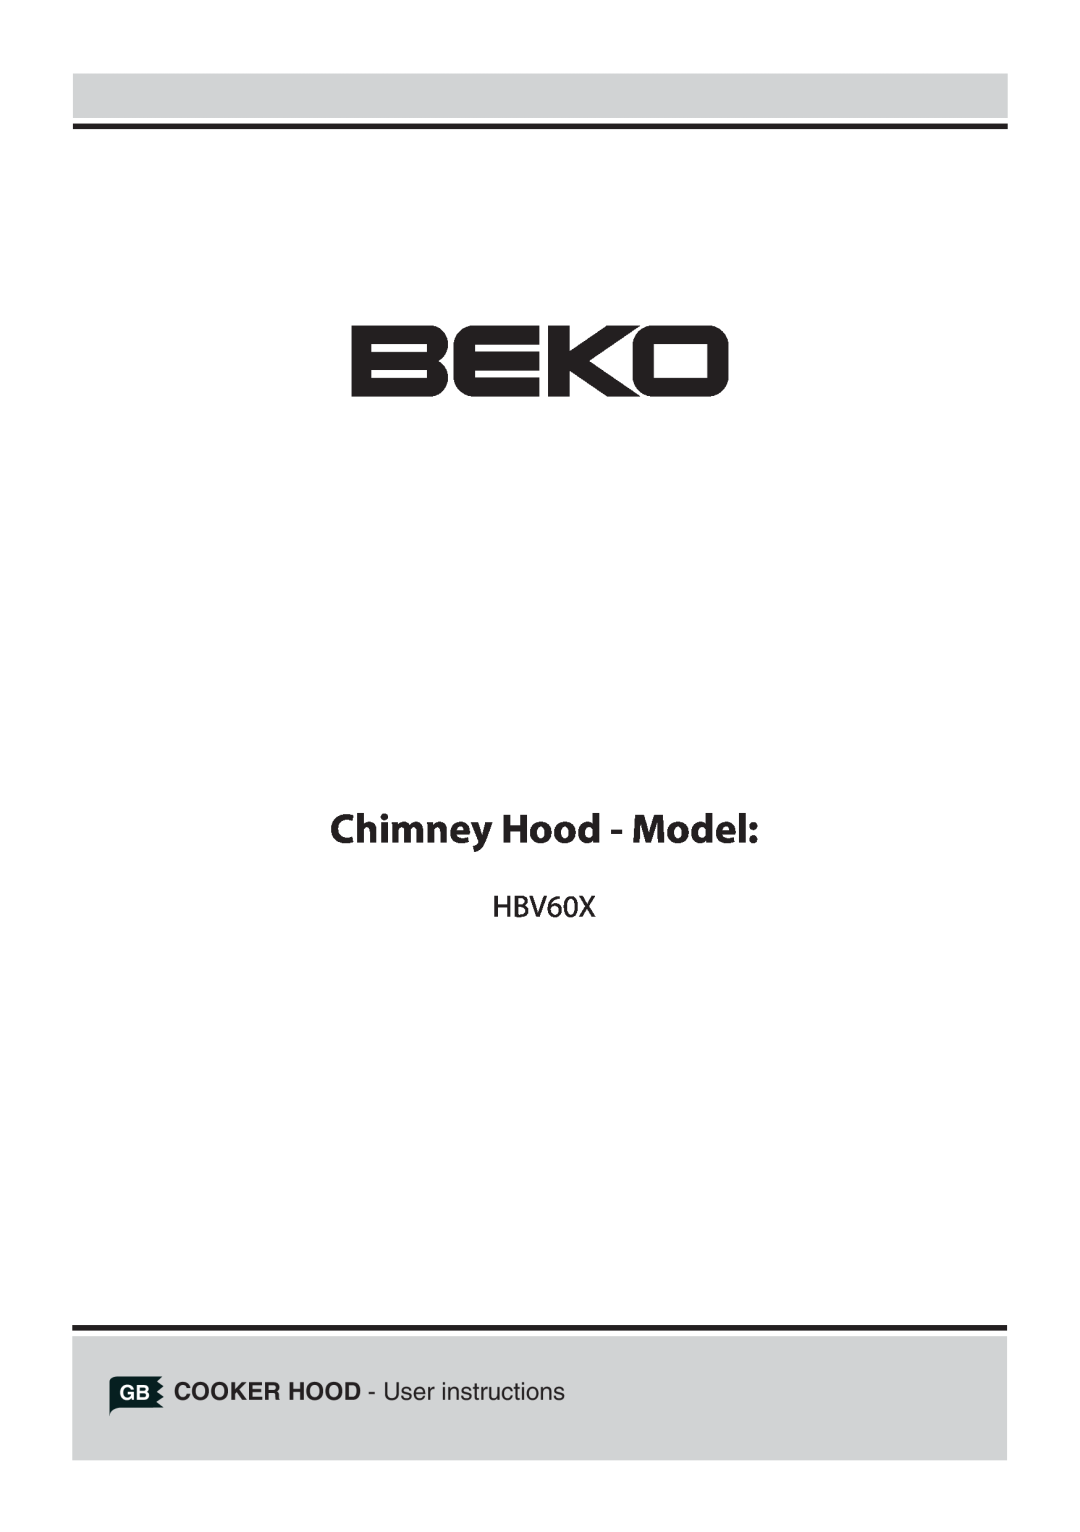 Beko HBV60X manual Chimney Hood - Model, GB COOKER HOOD - User instructions 